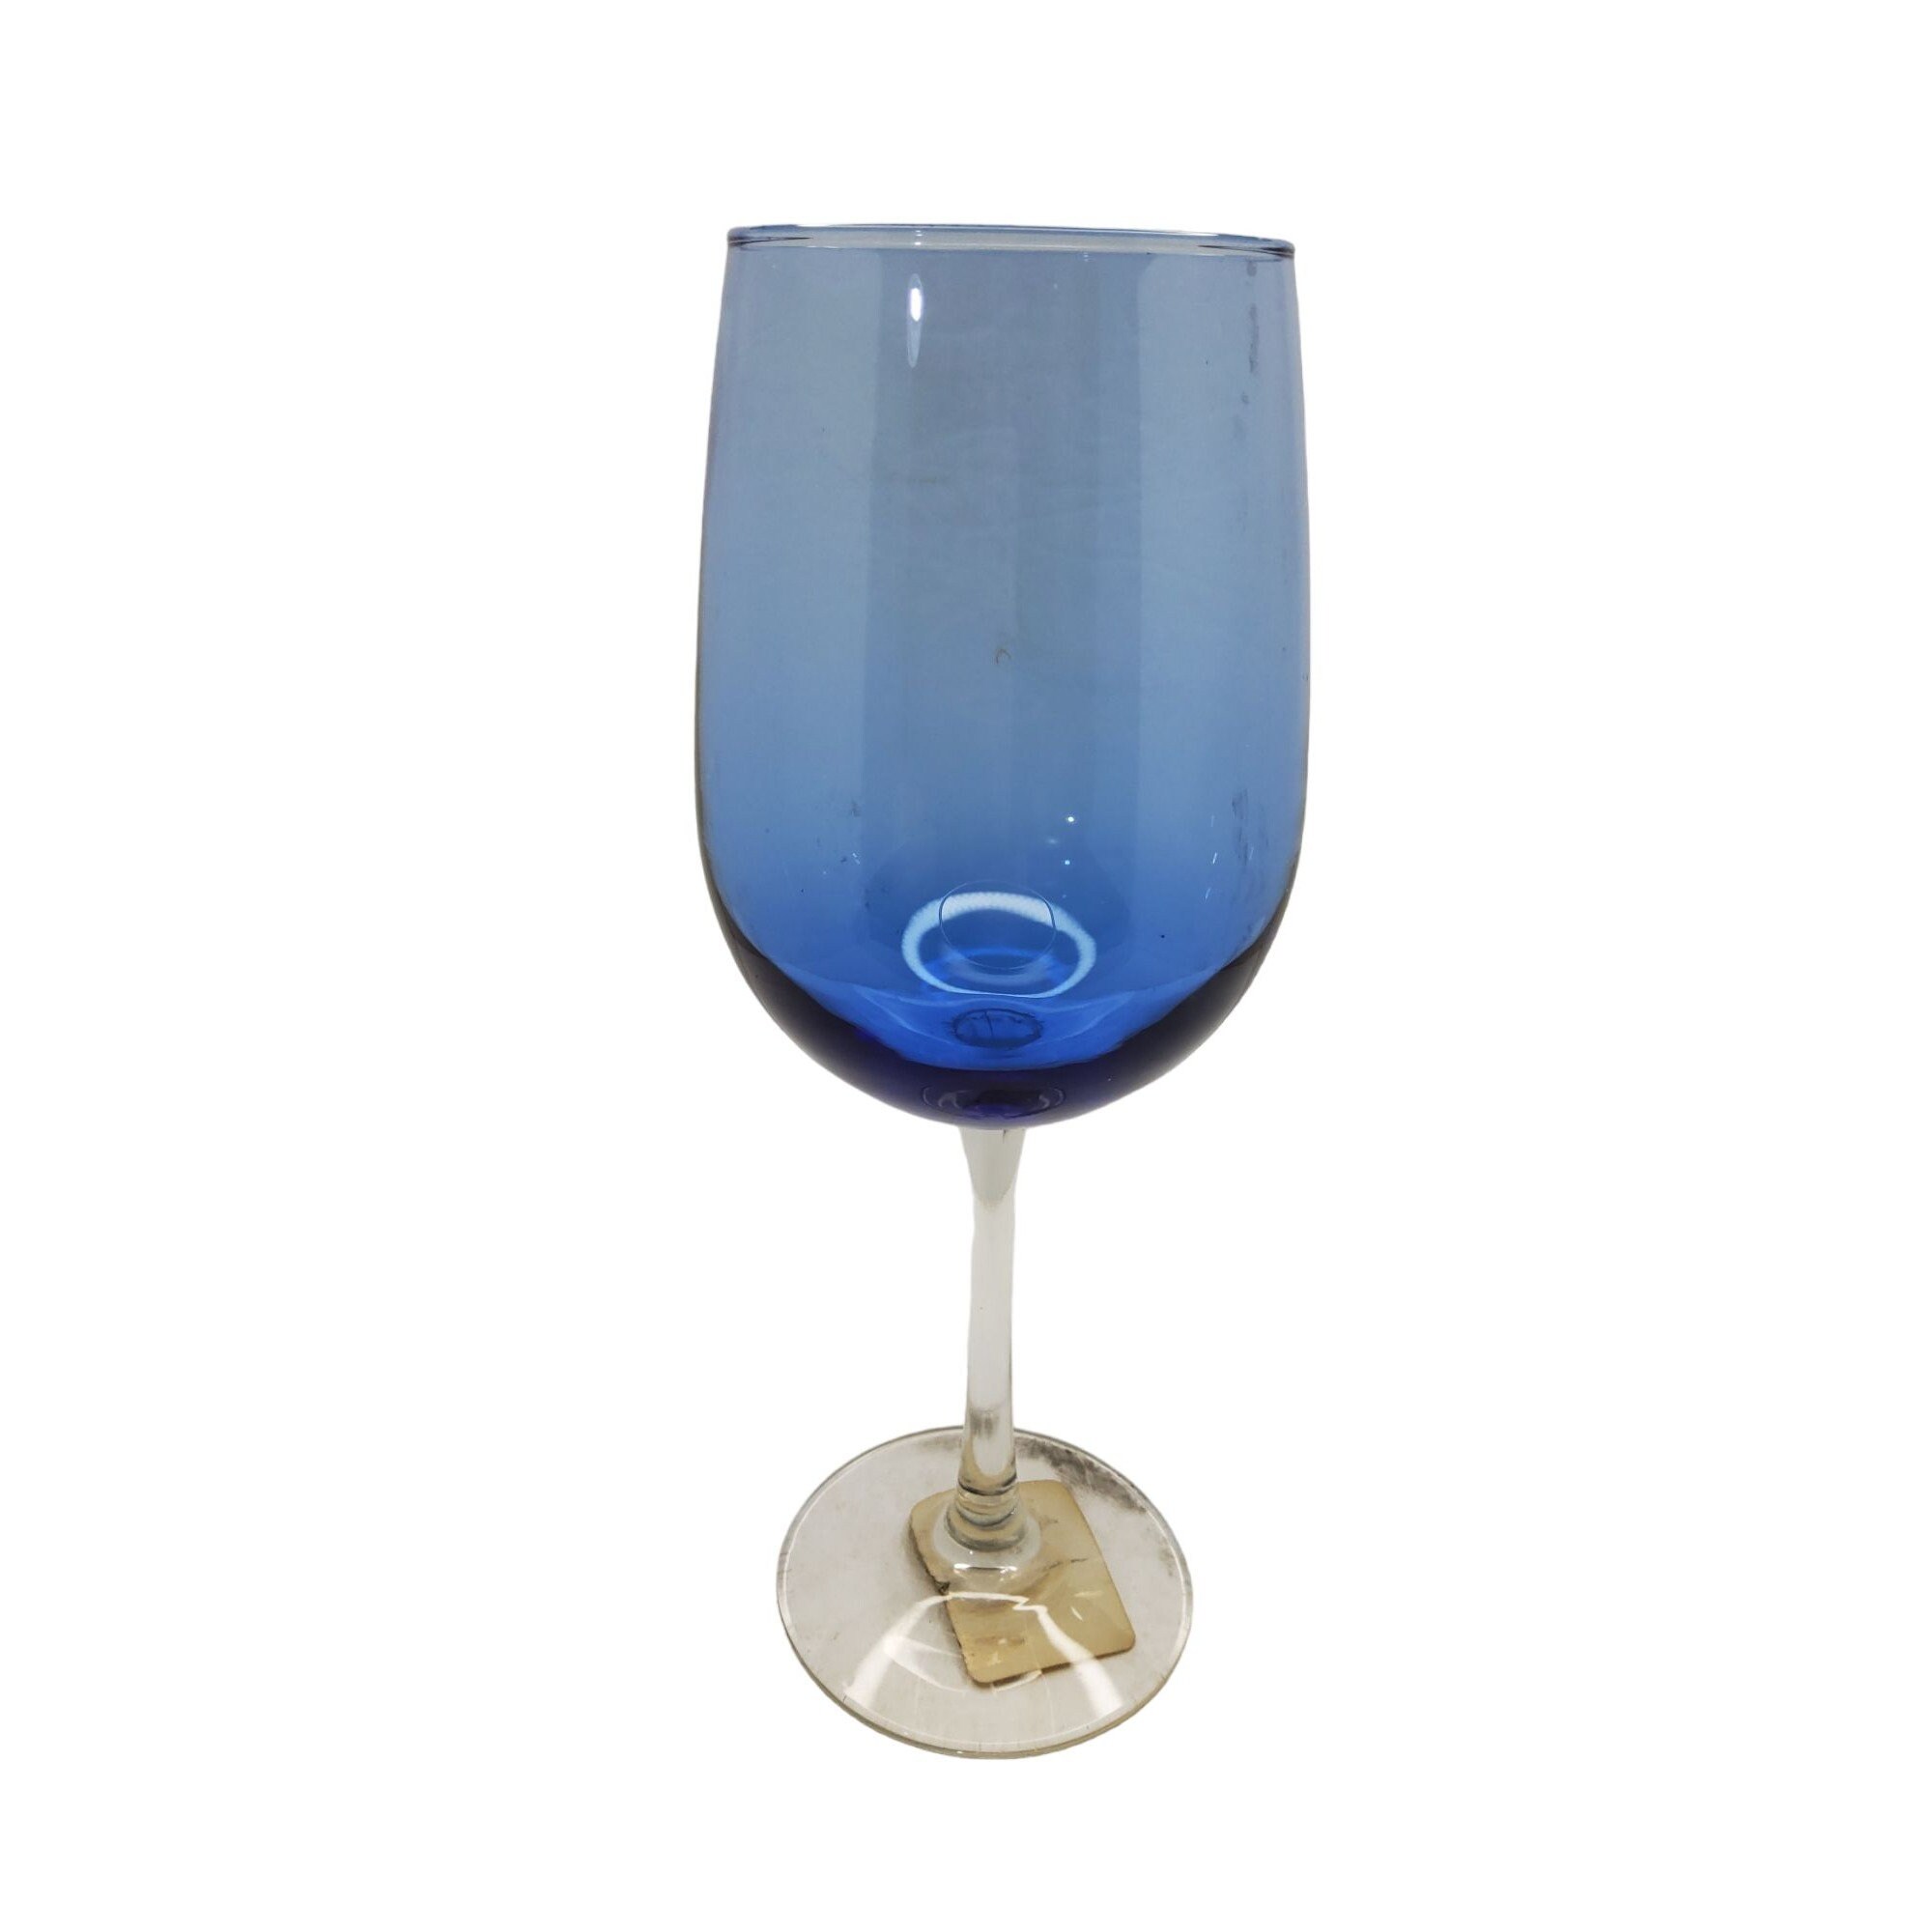 Set of (3) MARTINI GLASSES Greenbrier International 12 oz. Blown glass.